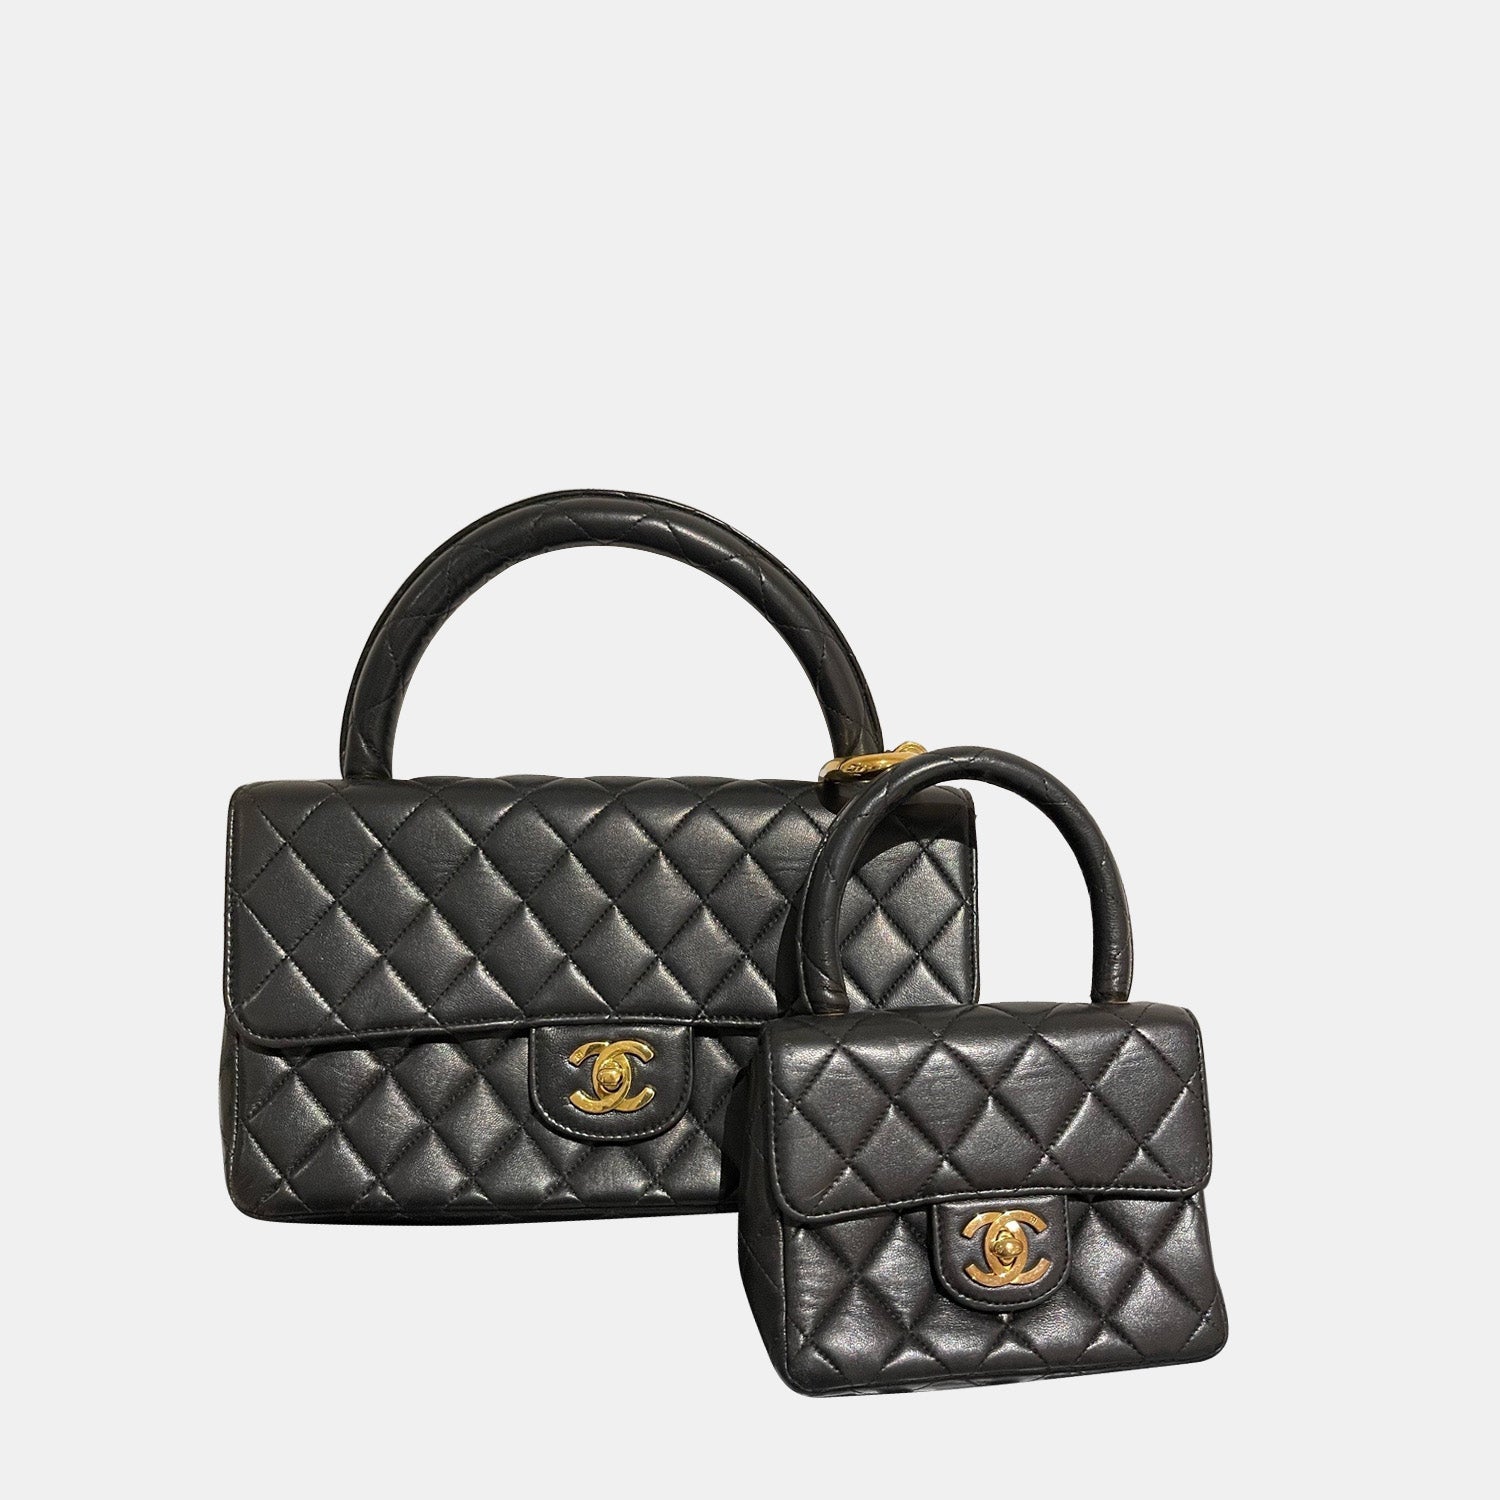 Chanel Black Lambskin Leather Vintage Kelly Top Handle Bag Chanel